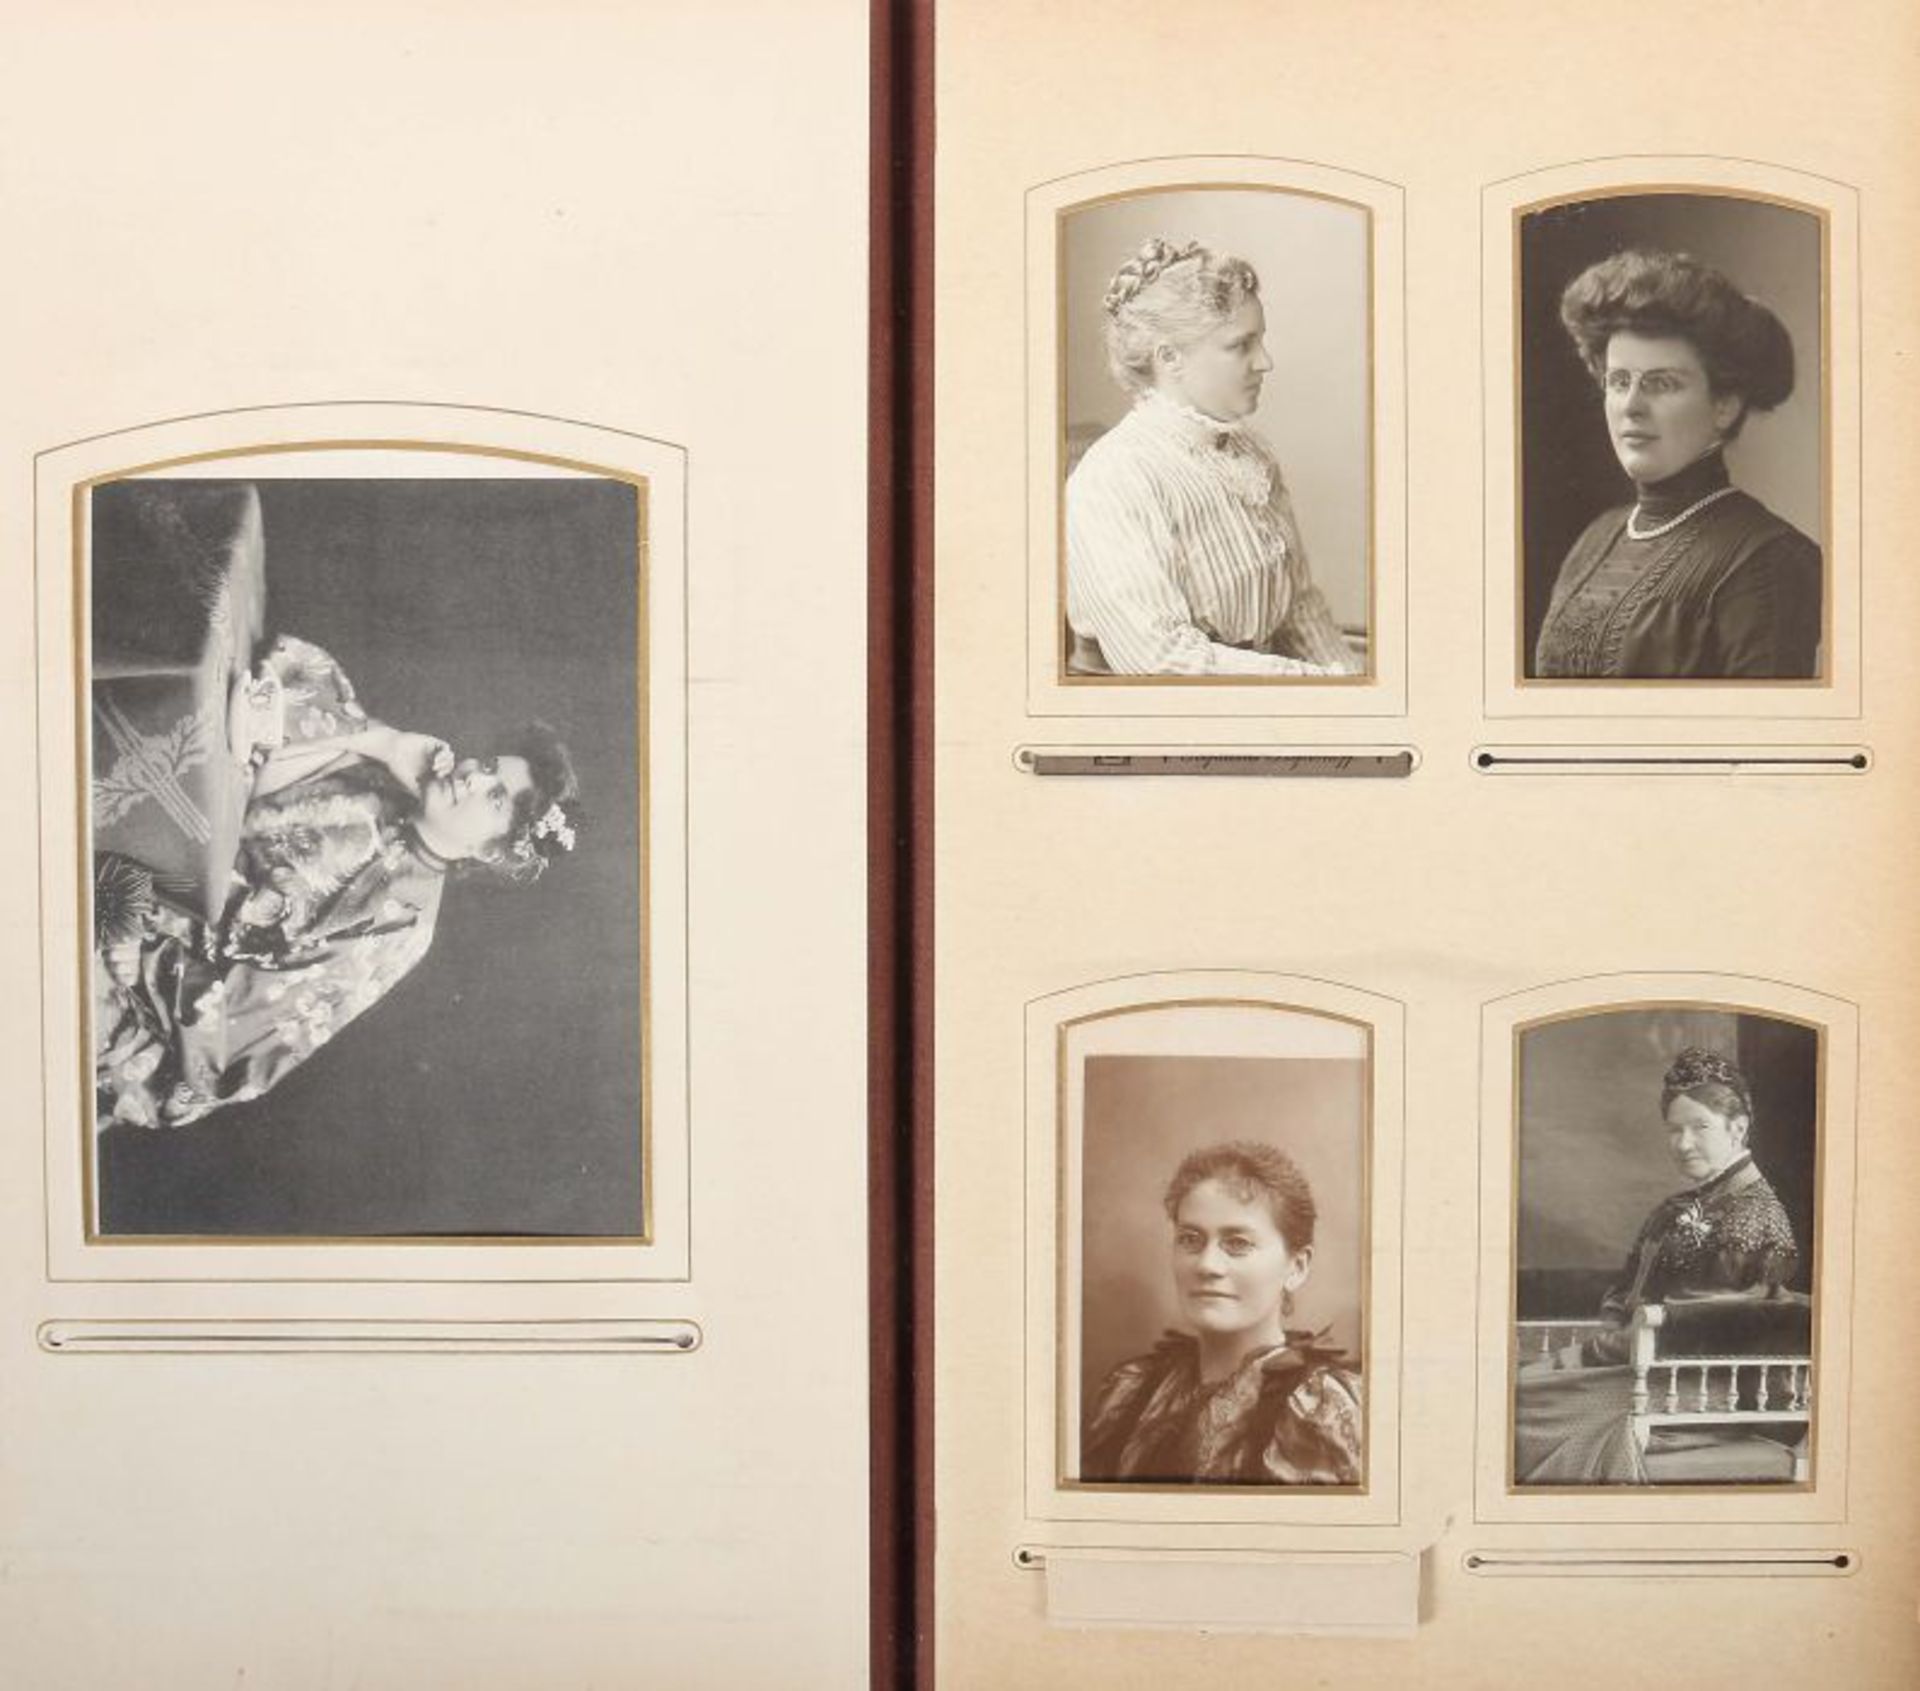 FamilienalbumDeutschland, um 1905, Album mit ca. 57 s/w-Fotografien, in lederbezogenem - Bild 4 aus 5